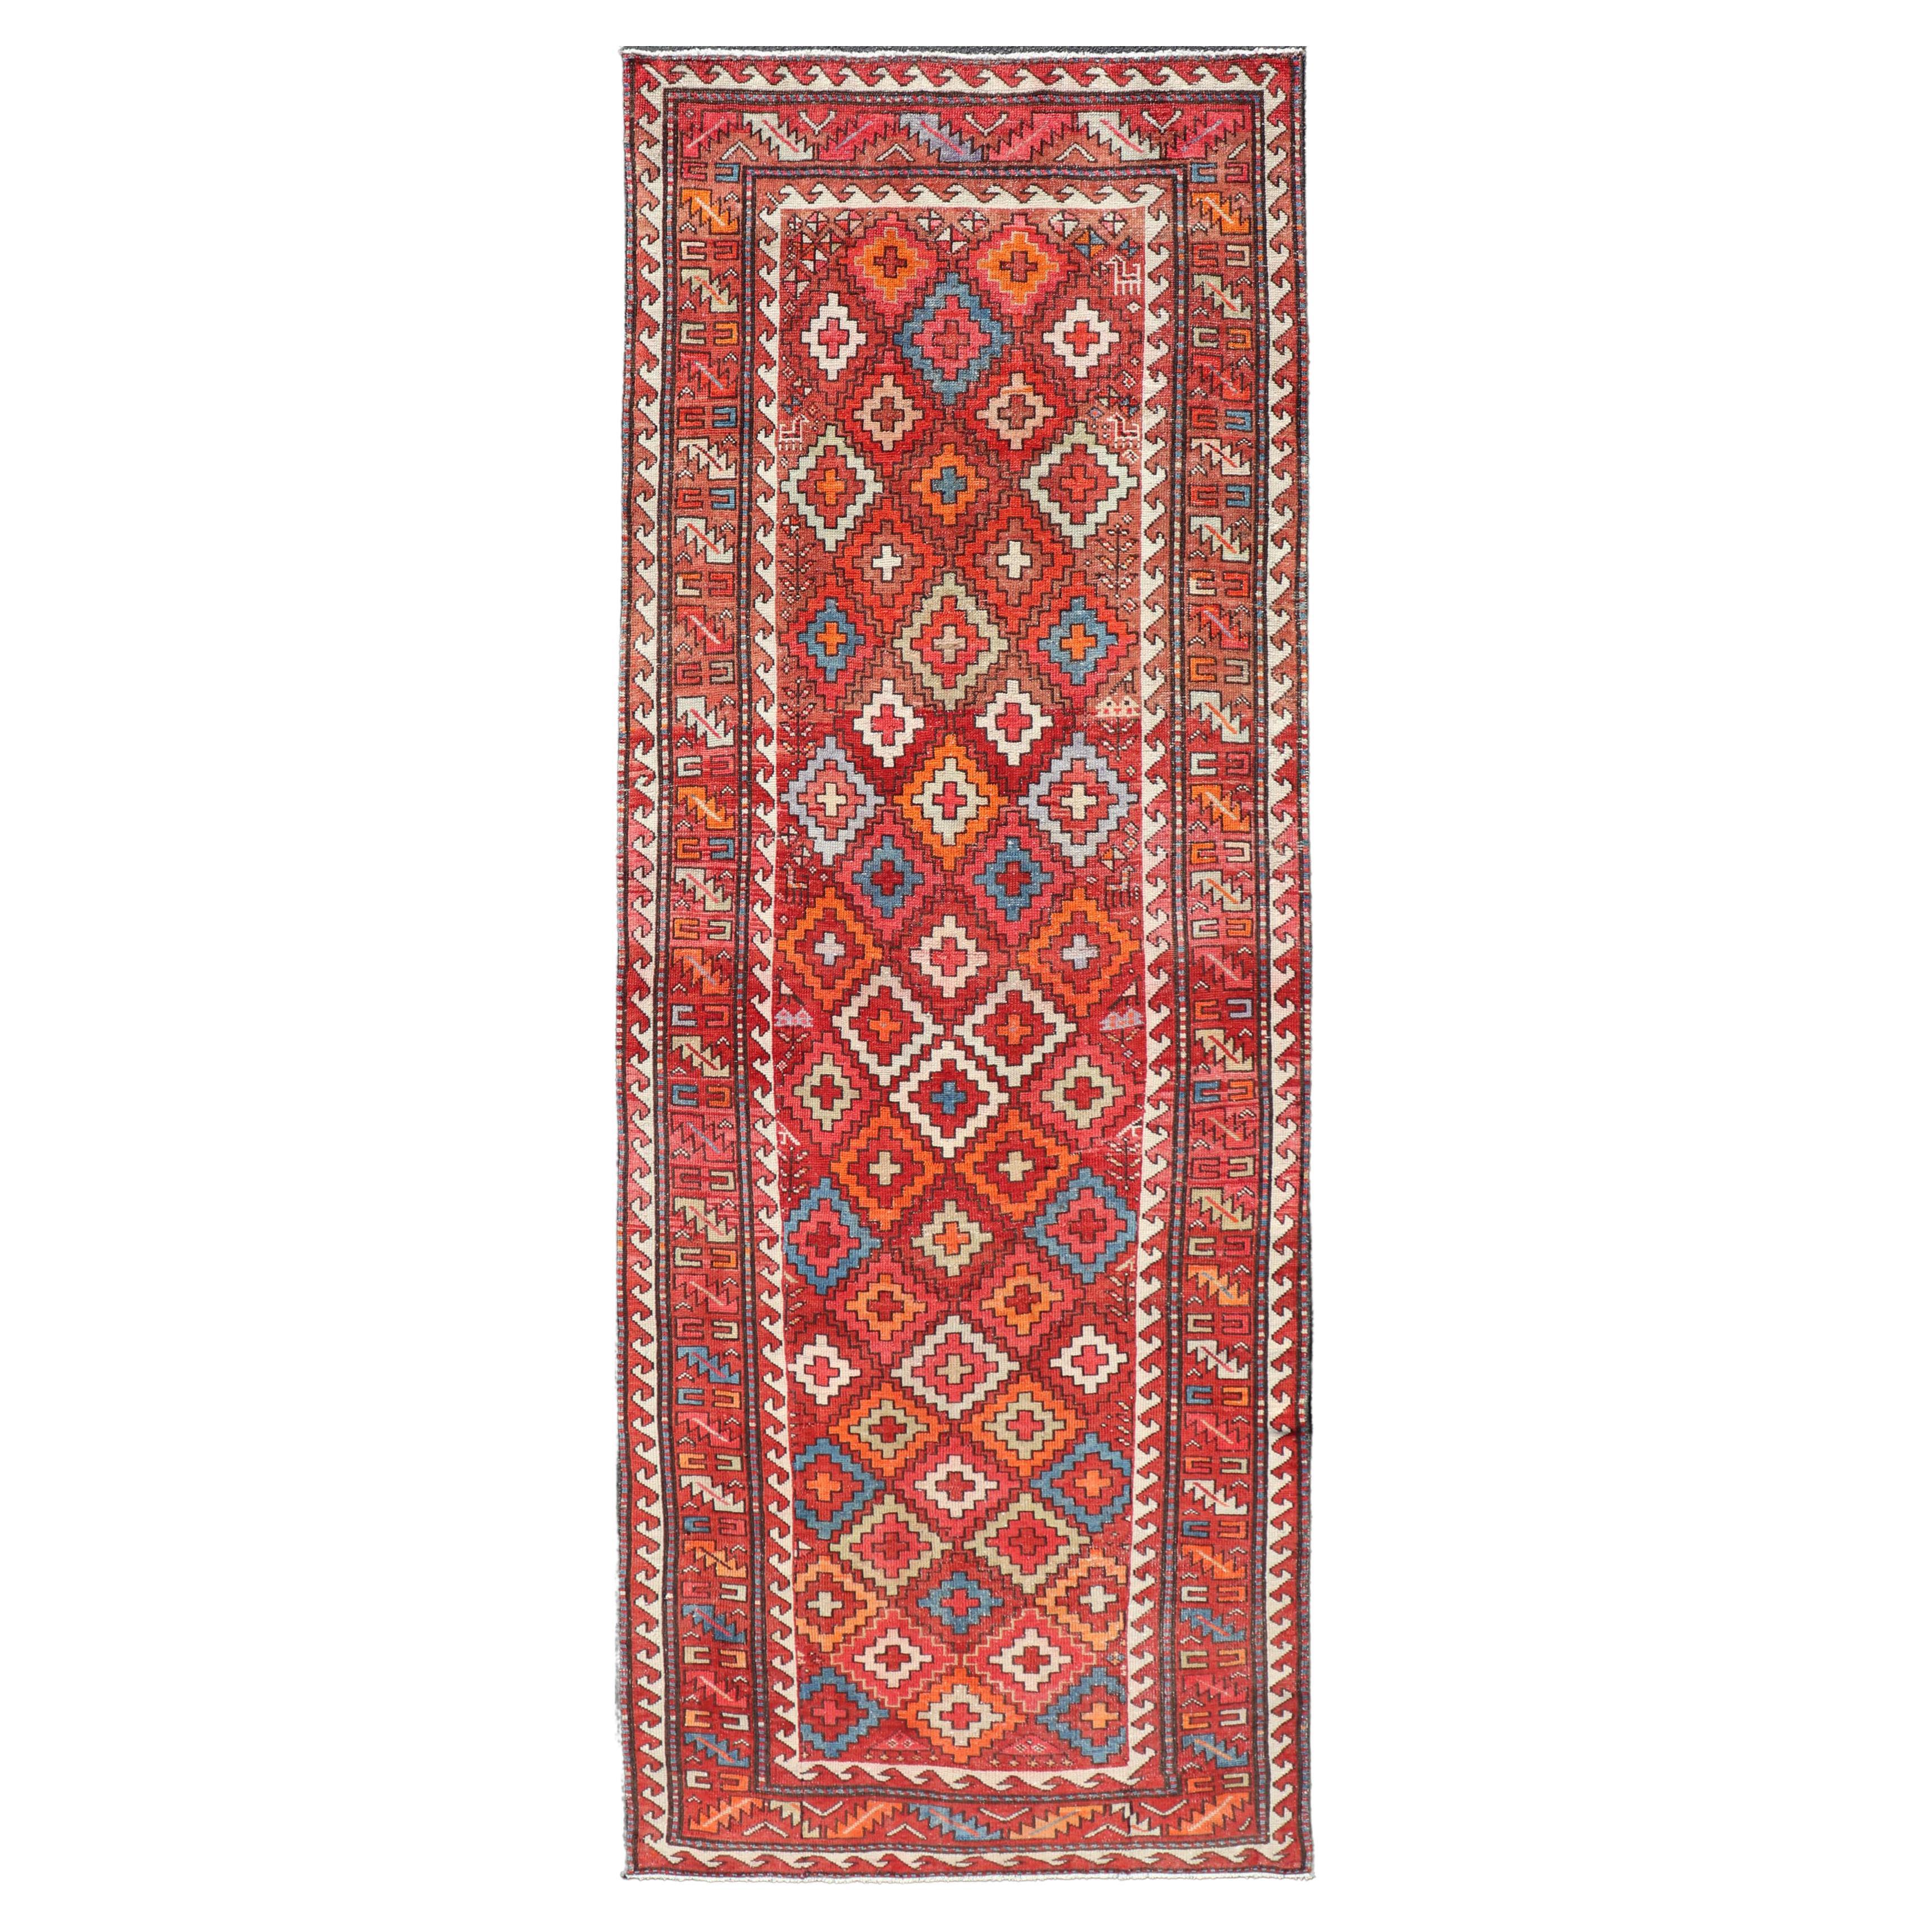 Antique Persian Fine Weave Hamadan Gallery Rug in Multi Colors in Tribal Design